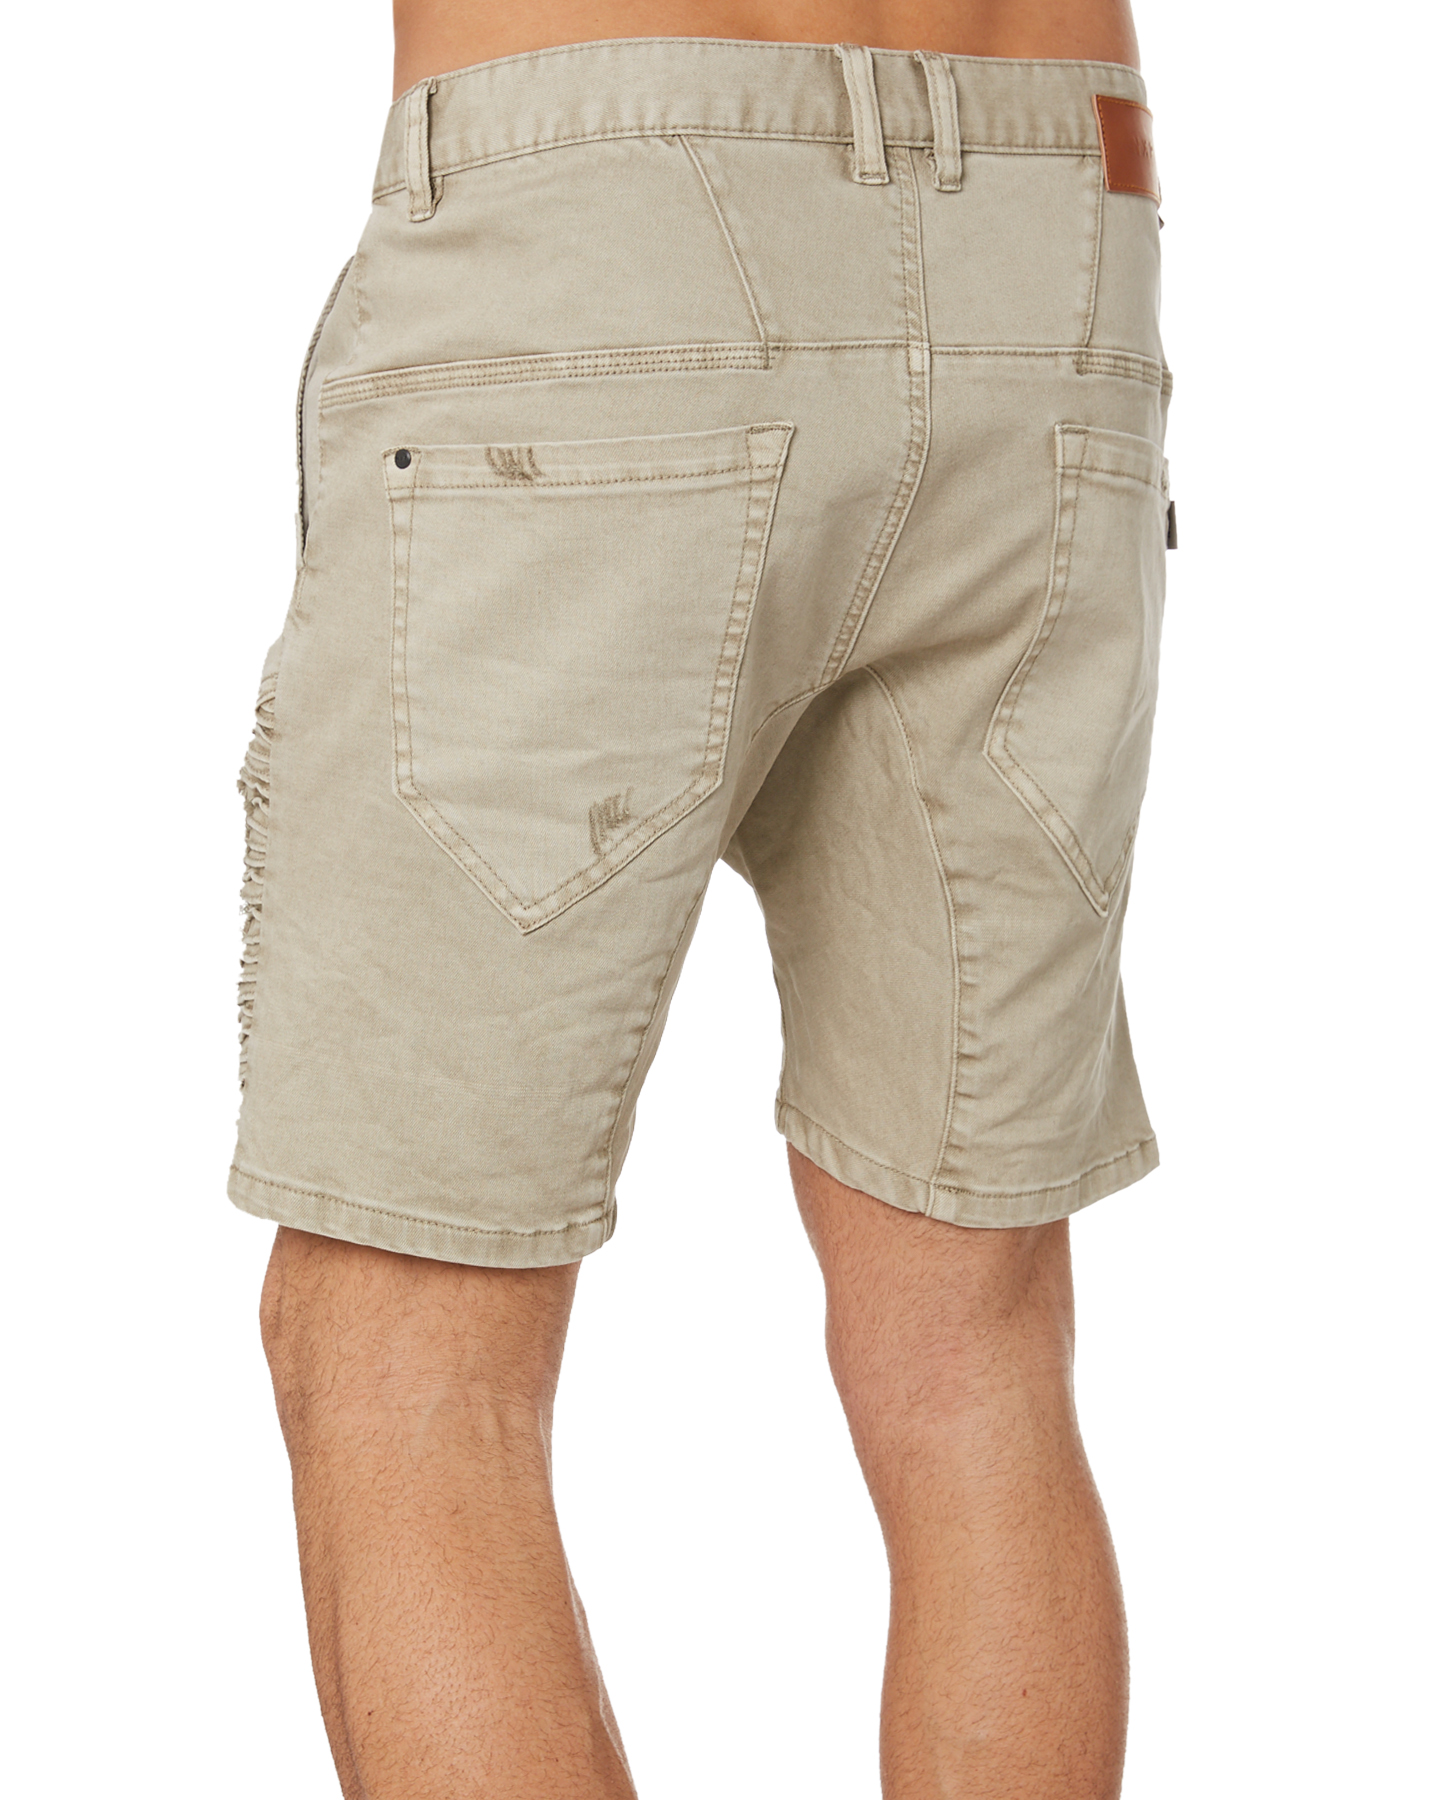 nxp destroyer shorts